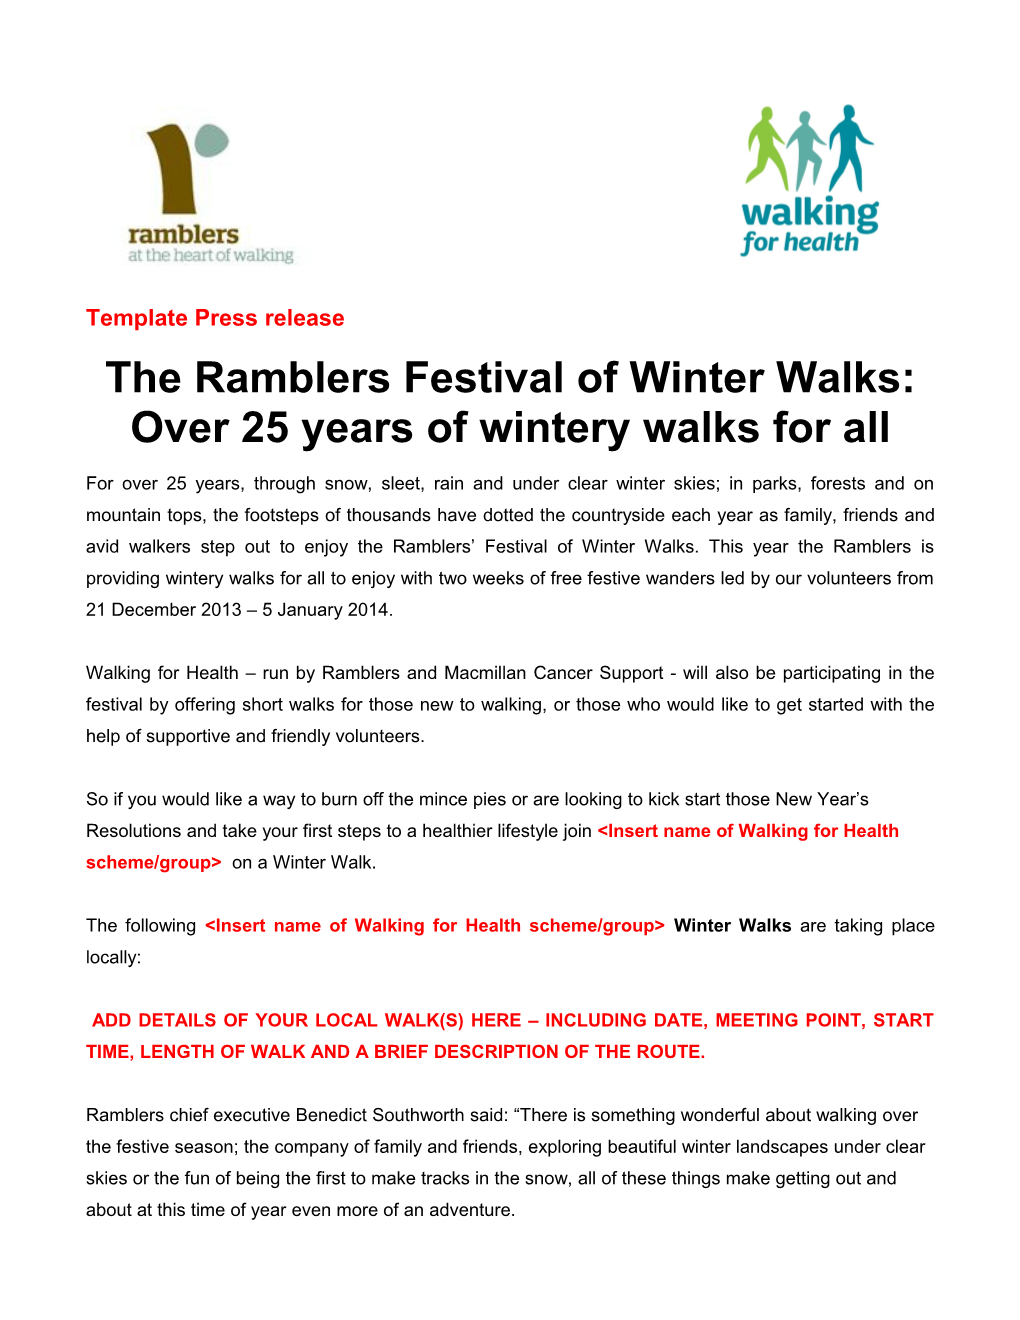 The Ramblers Festival of Winter Walks